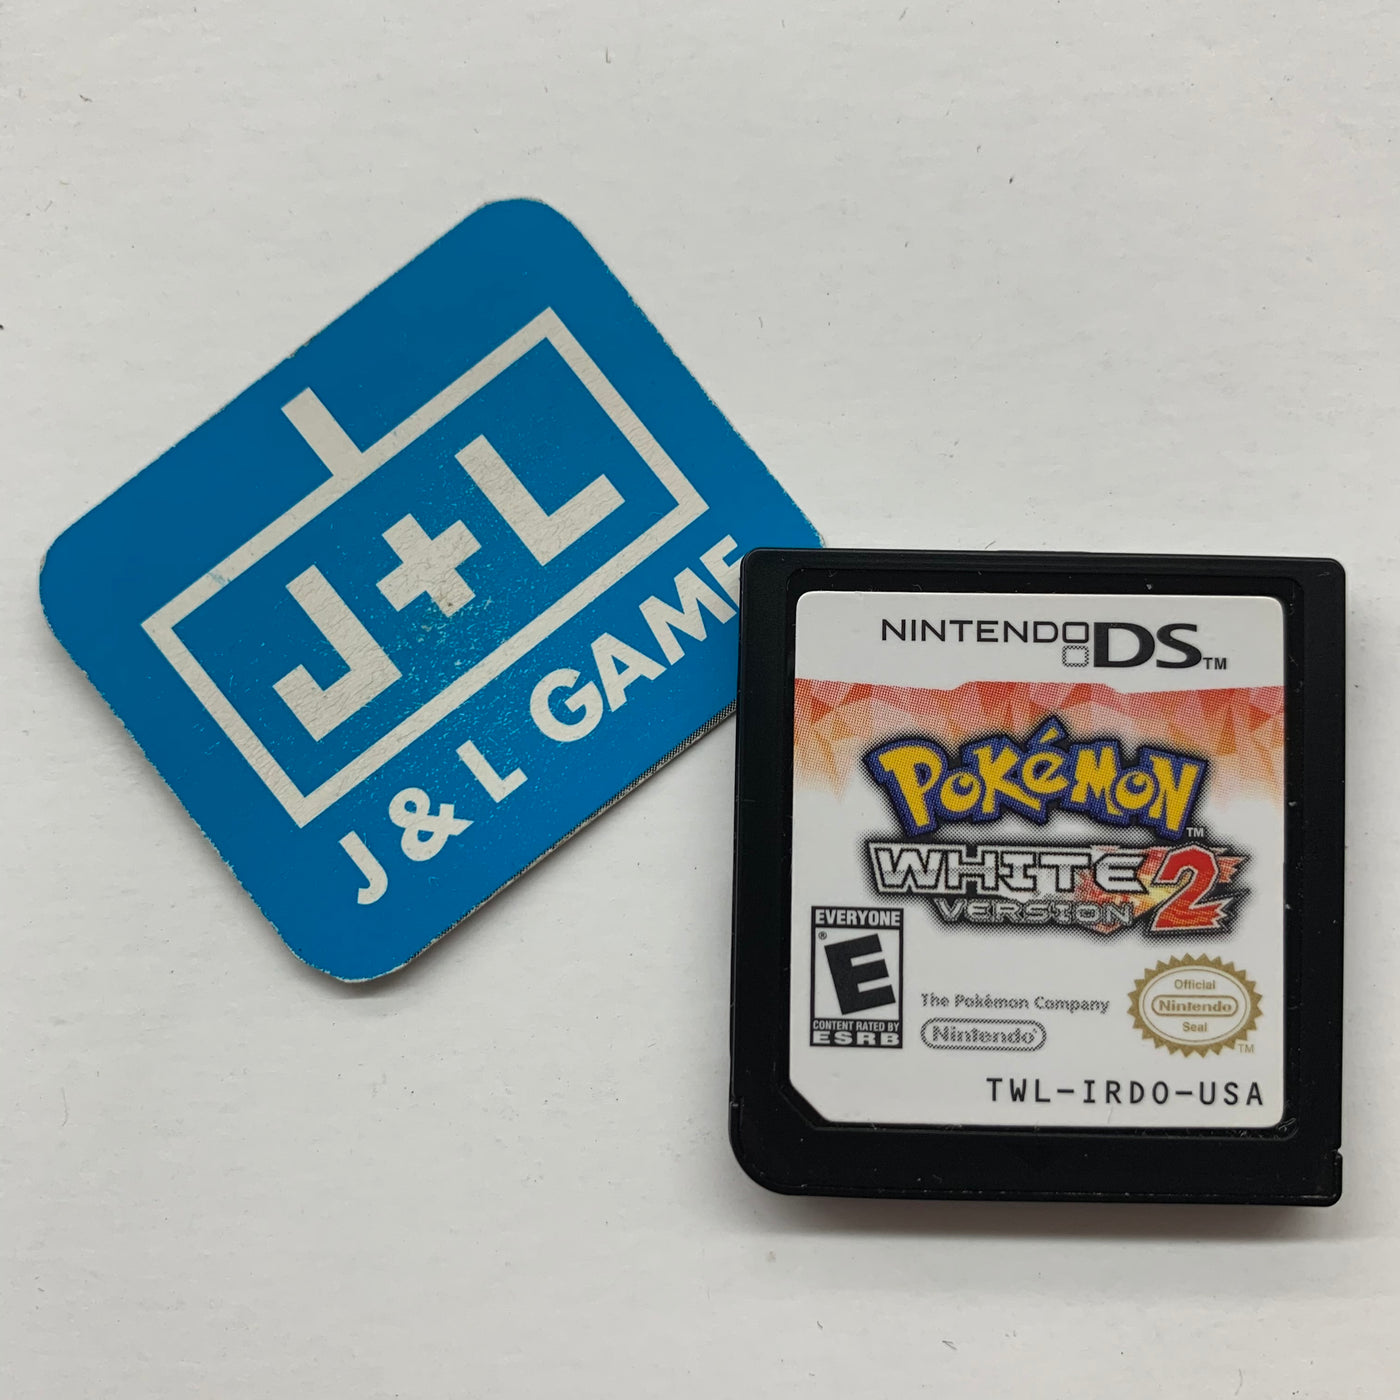 Pokemon White Version 2 - Nintendo DS